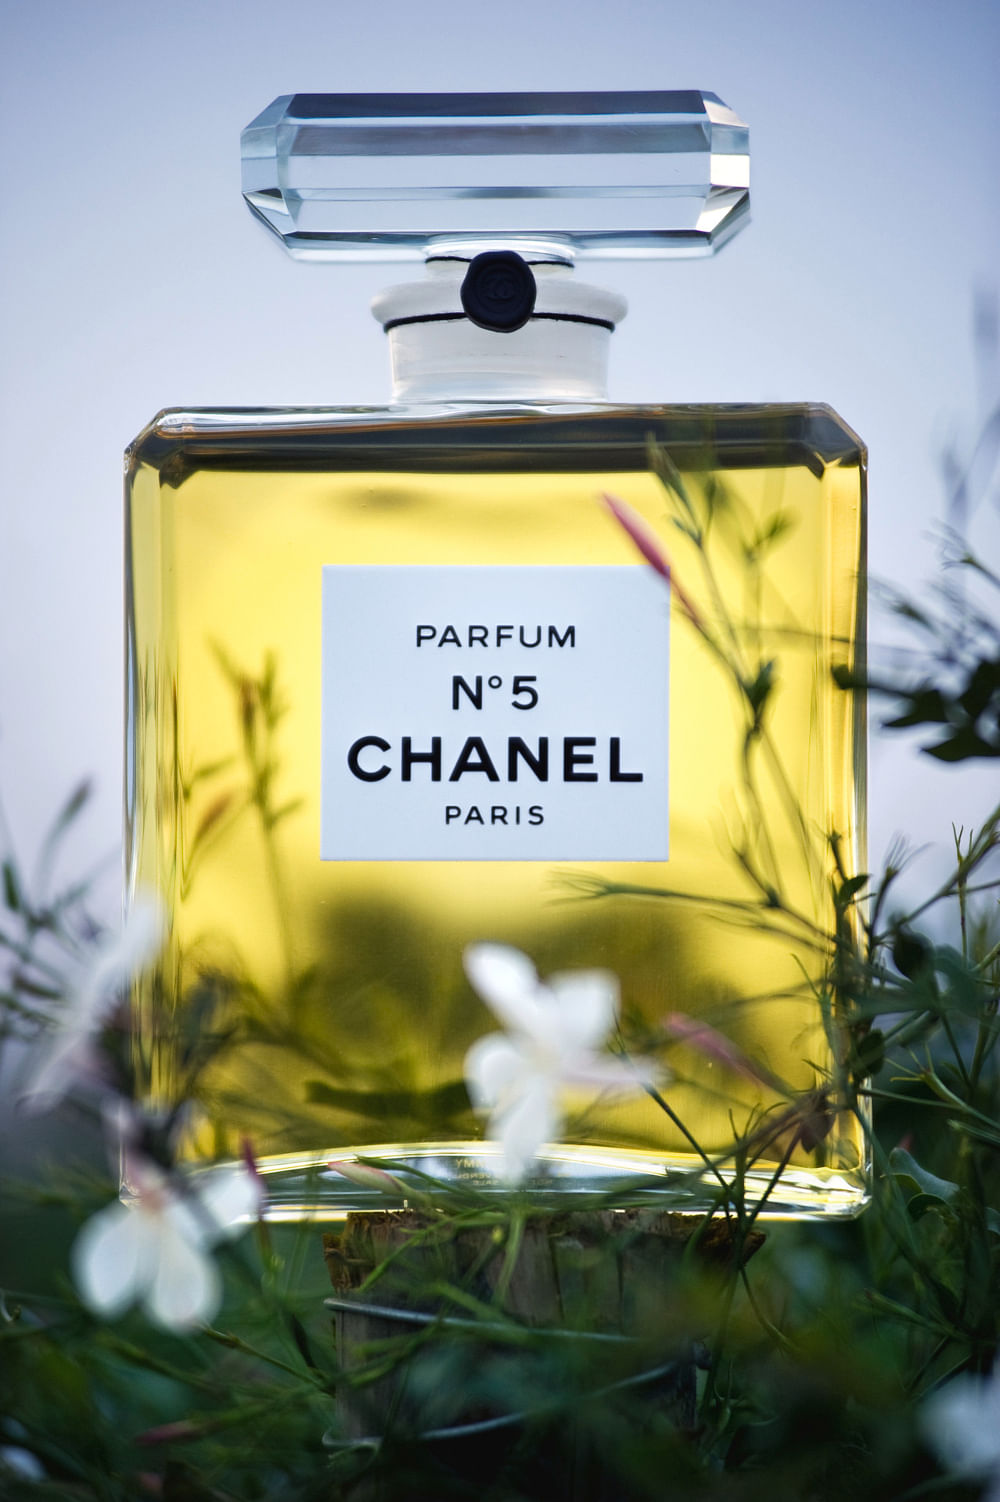 mademoiselle chanel no 5 perfume